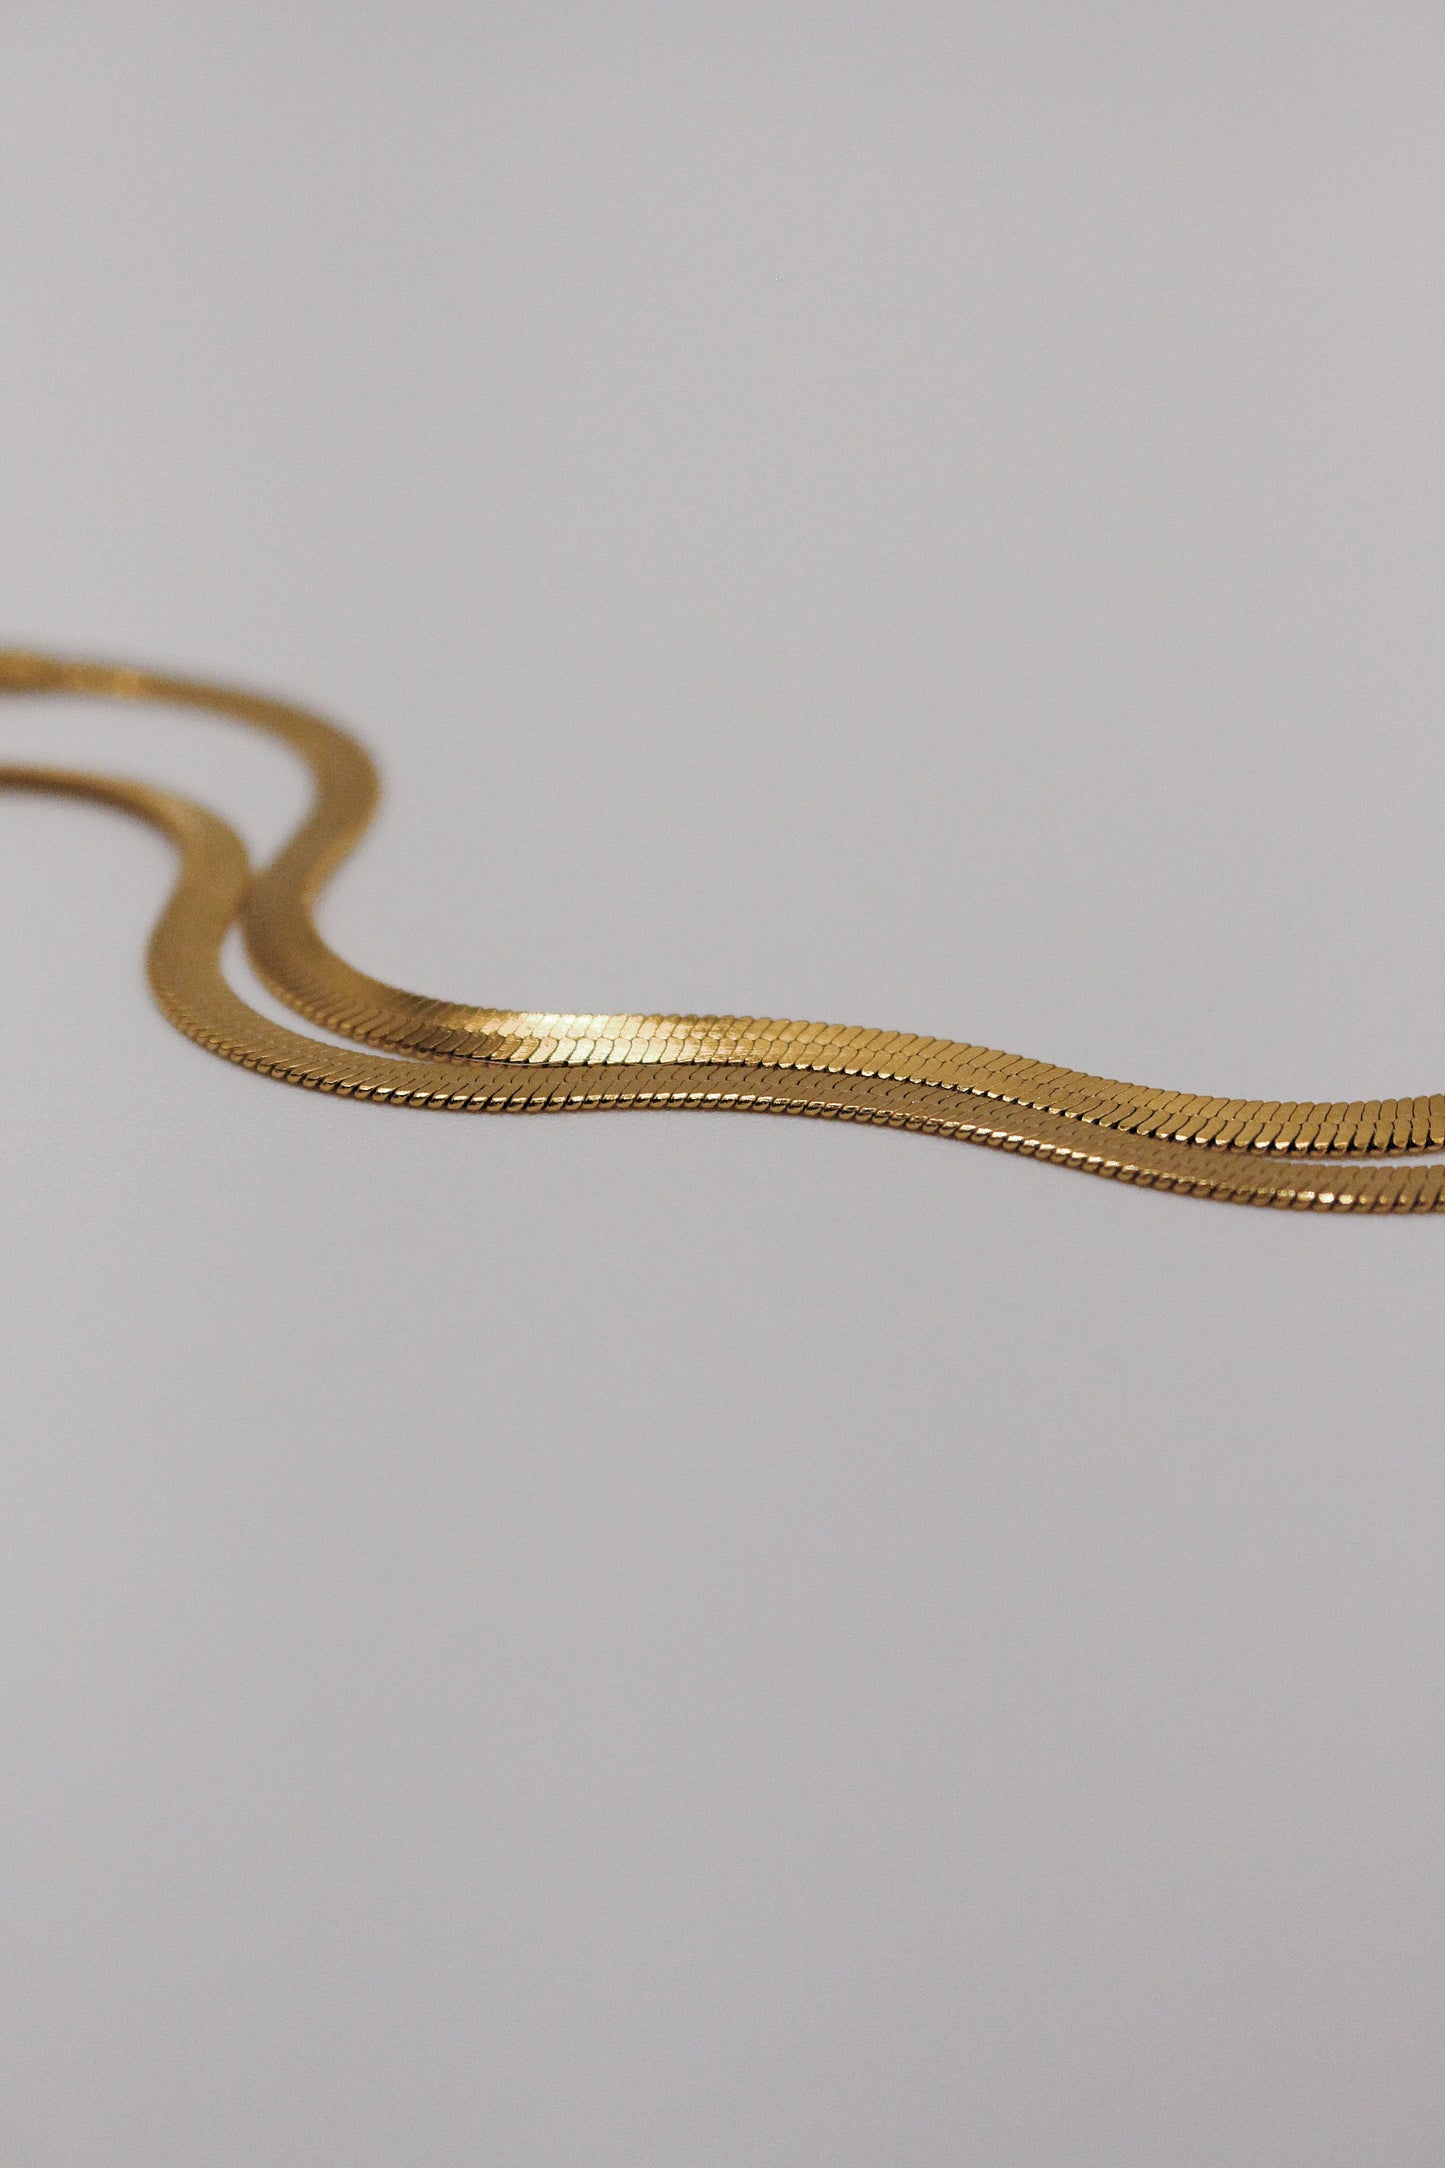 Trelle Necklace - 3mm